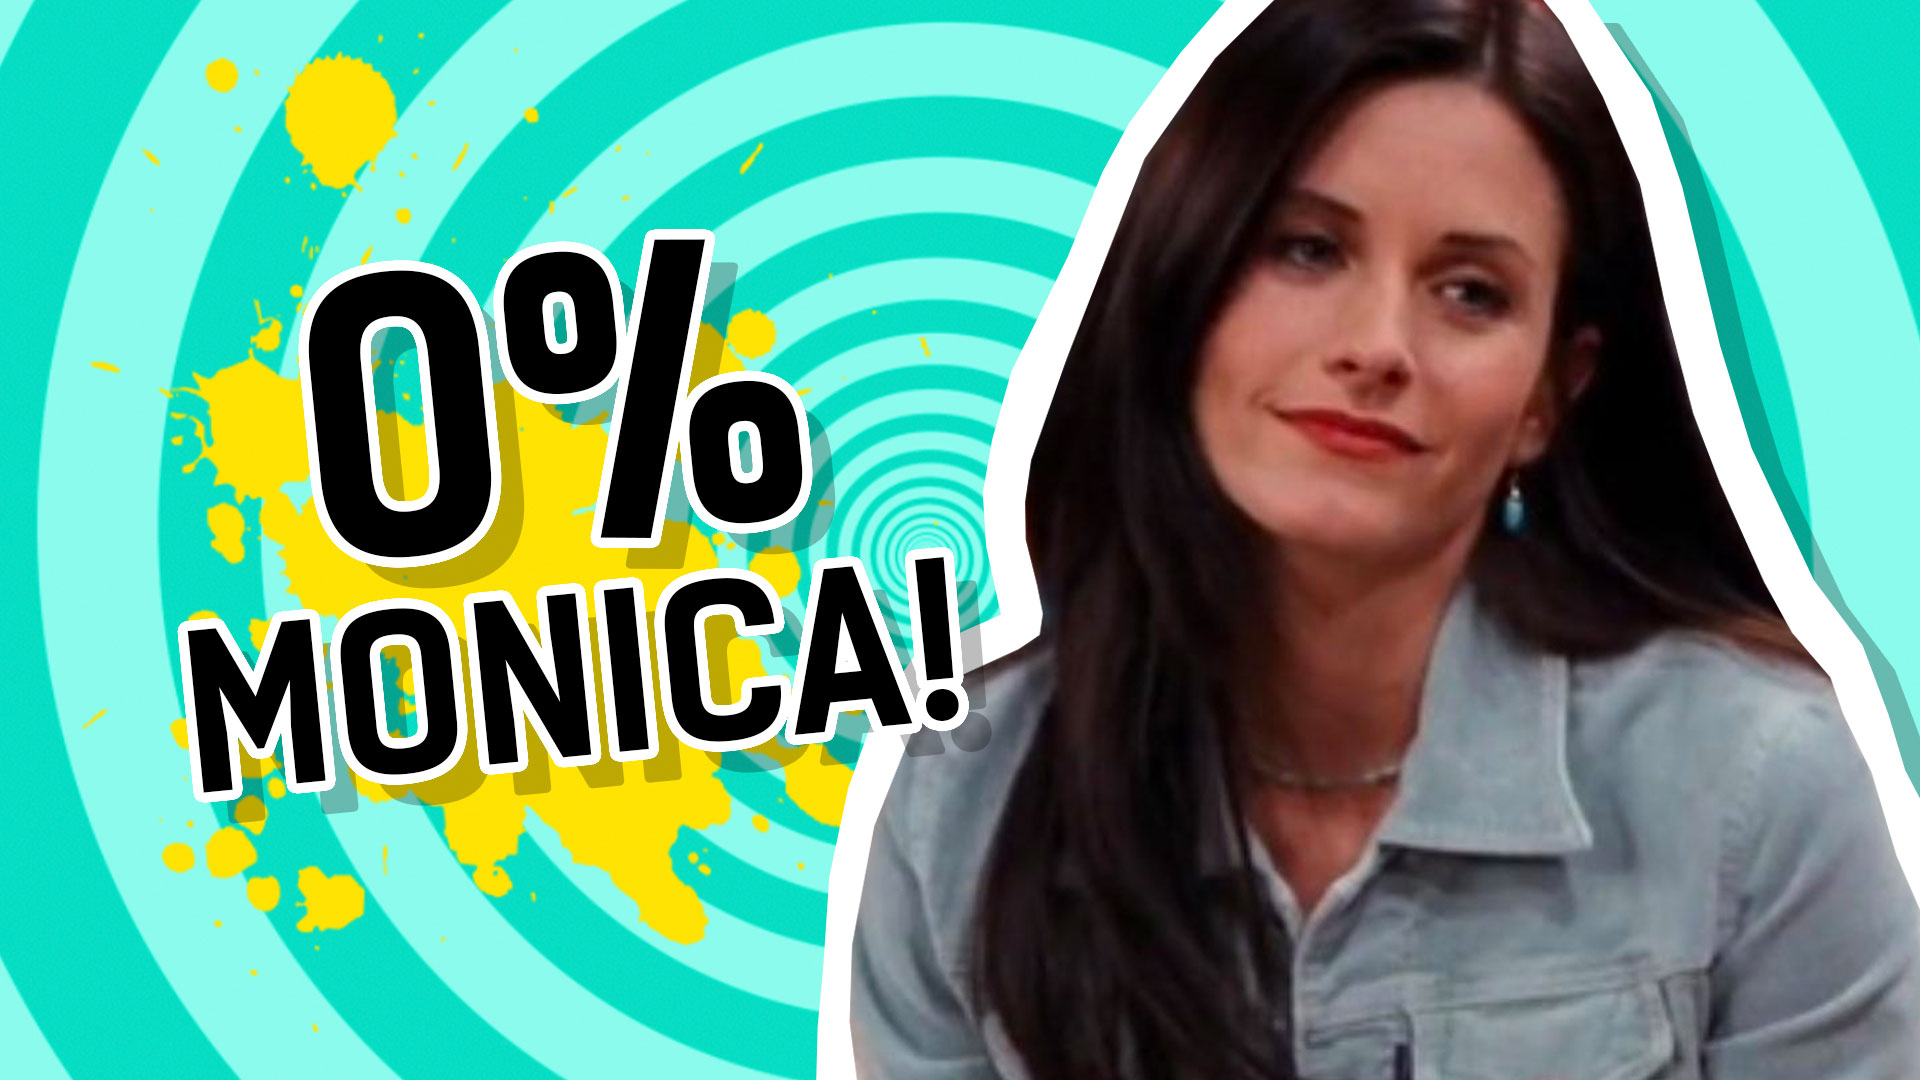 Result: 0% Monica